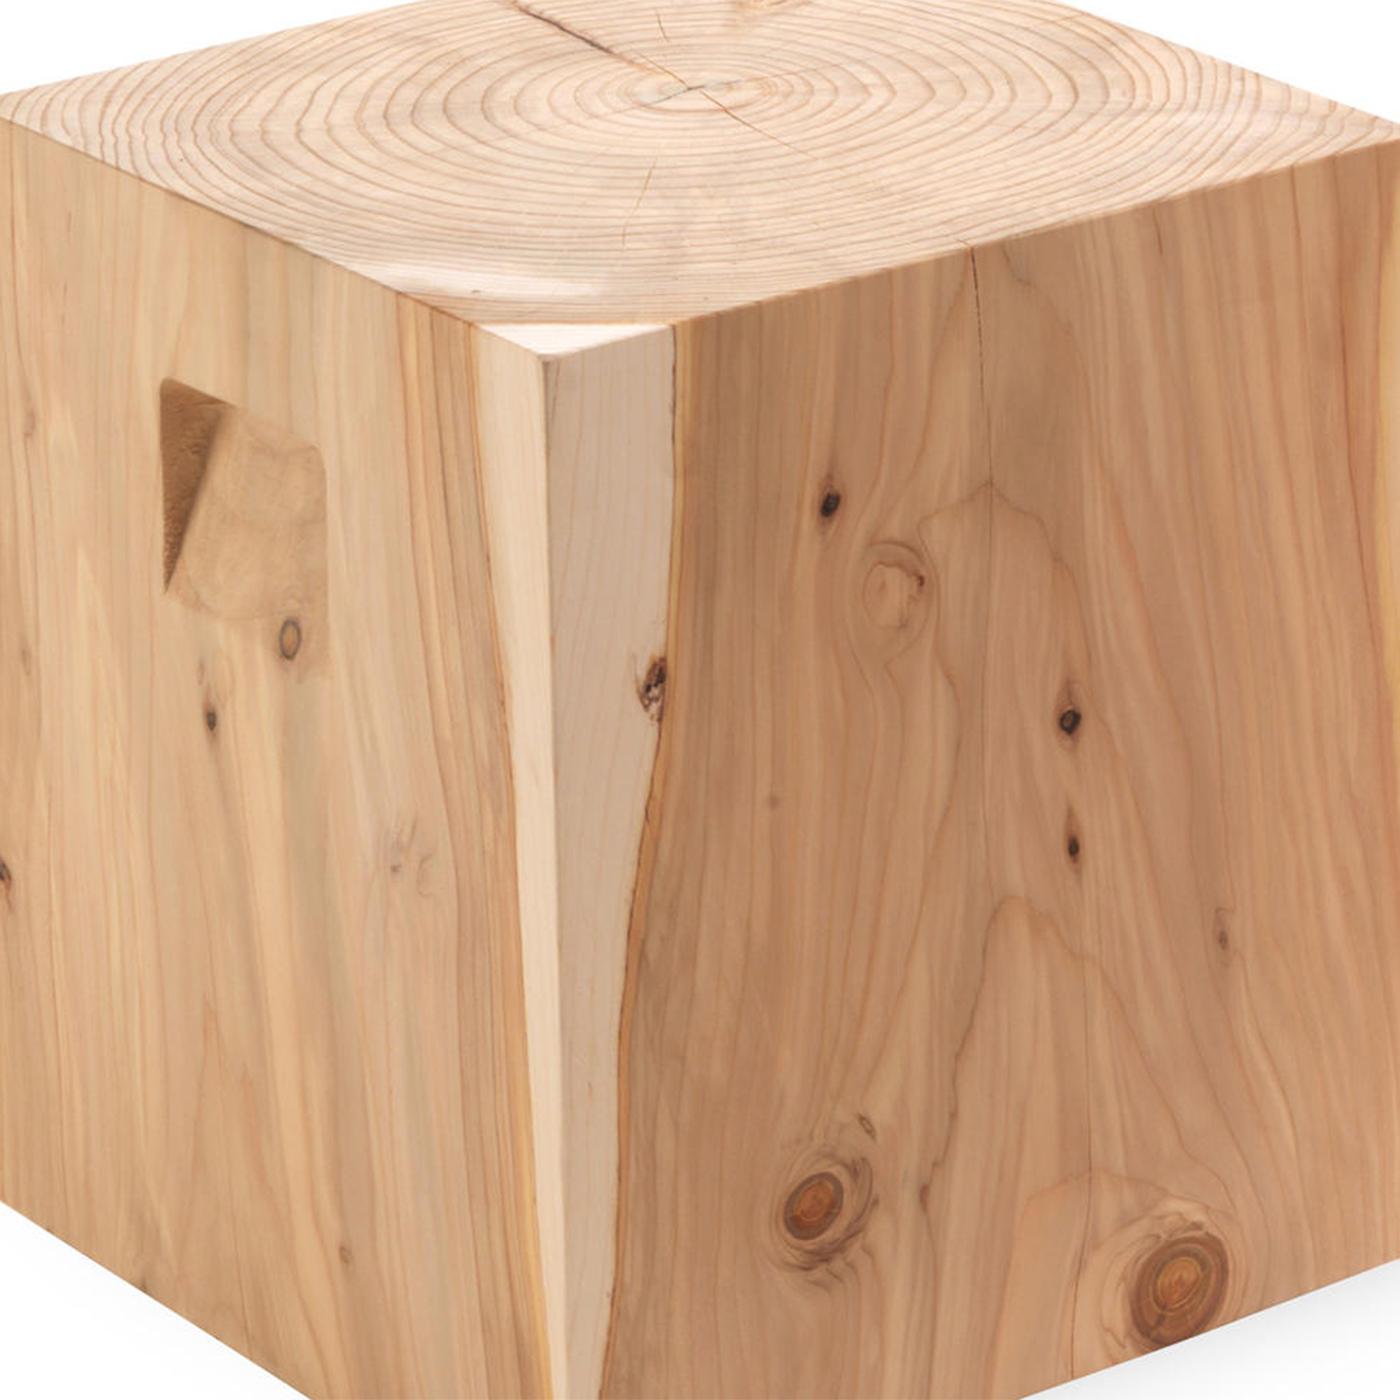 Hand-Crafted Cube Cedar Stool